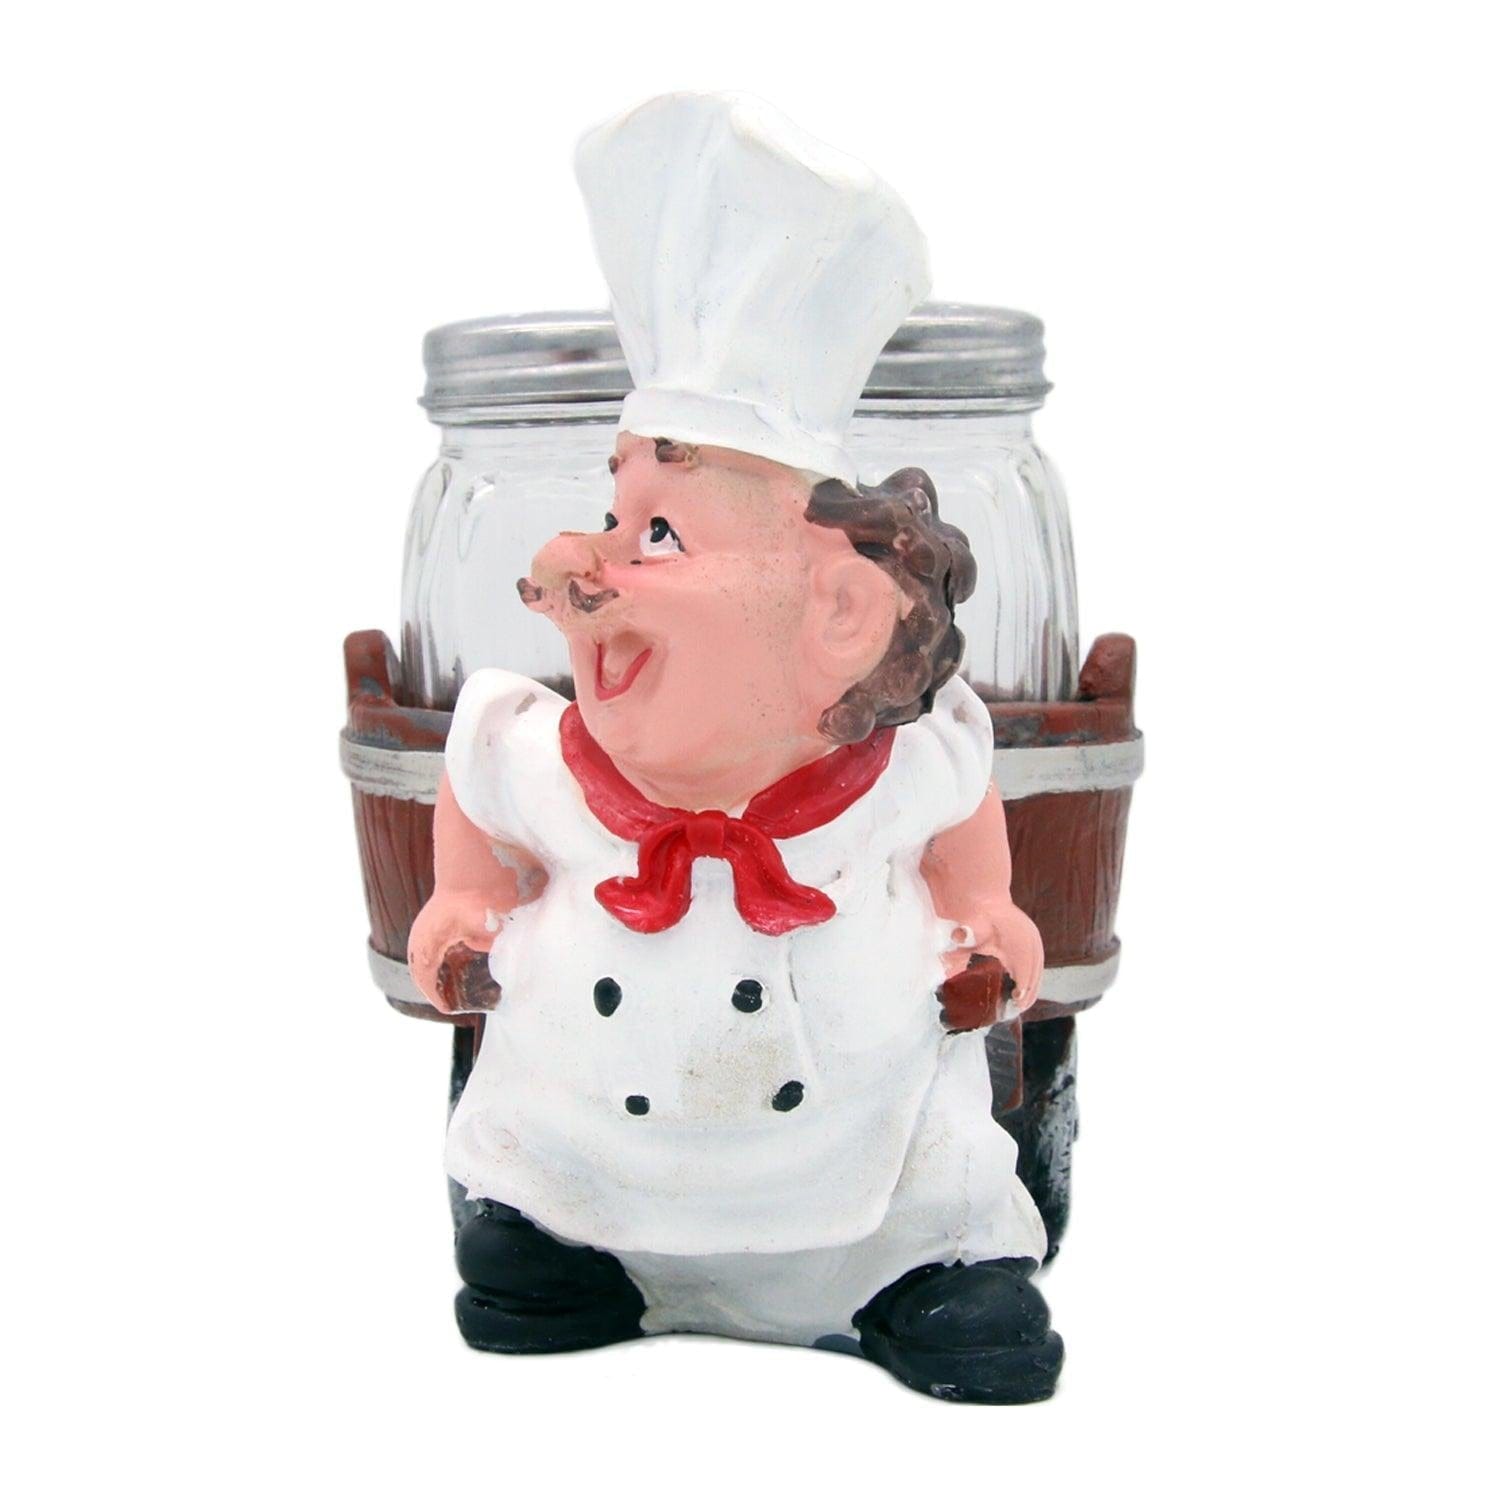 Foodie Chef Figurine Resin Salt & Pepper Shakers Holder Set (On Pull Cart)